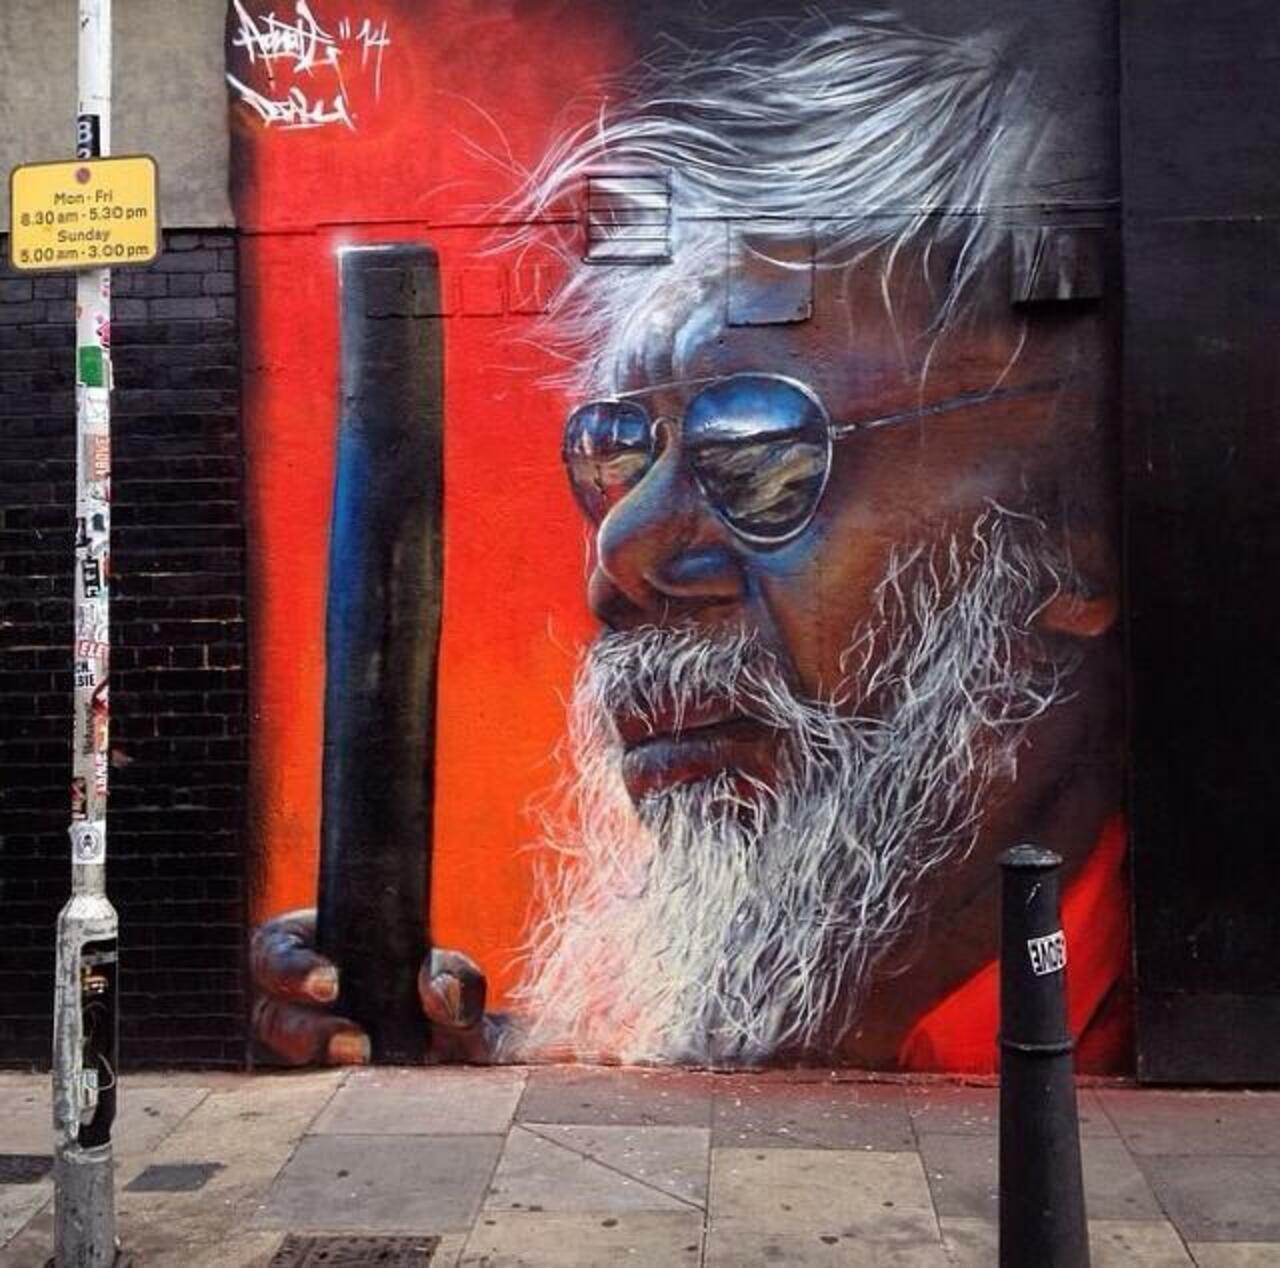 Artist Matt Adnate new photorealistic Street Art portrait in Shoreditch, London 

#art #graffiti #mural #streetart http://t.co/Oh676k58Fd